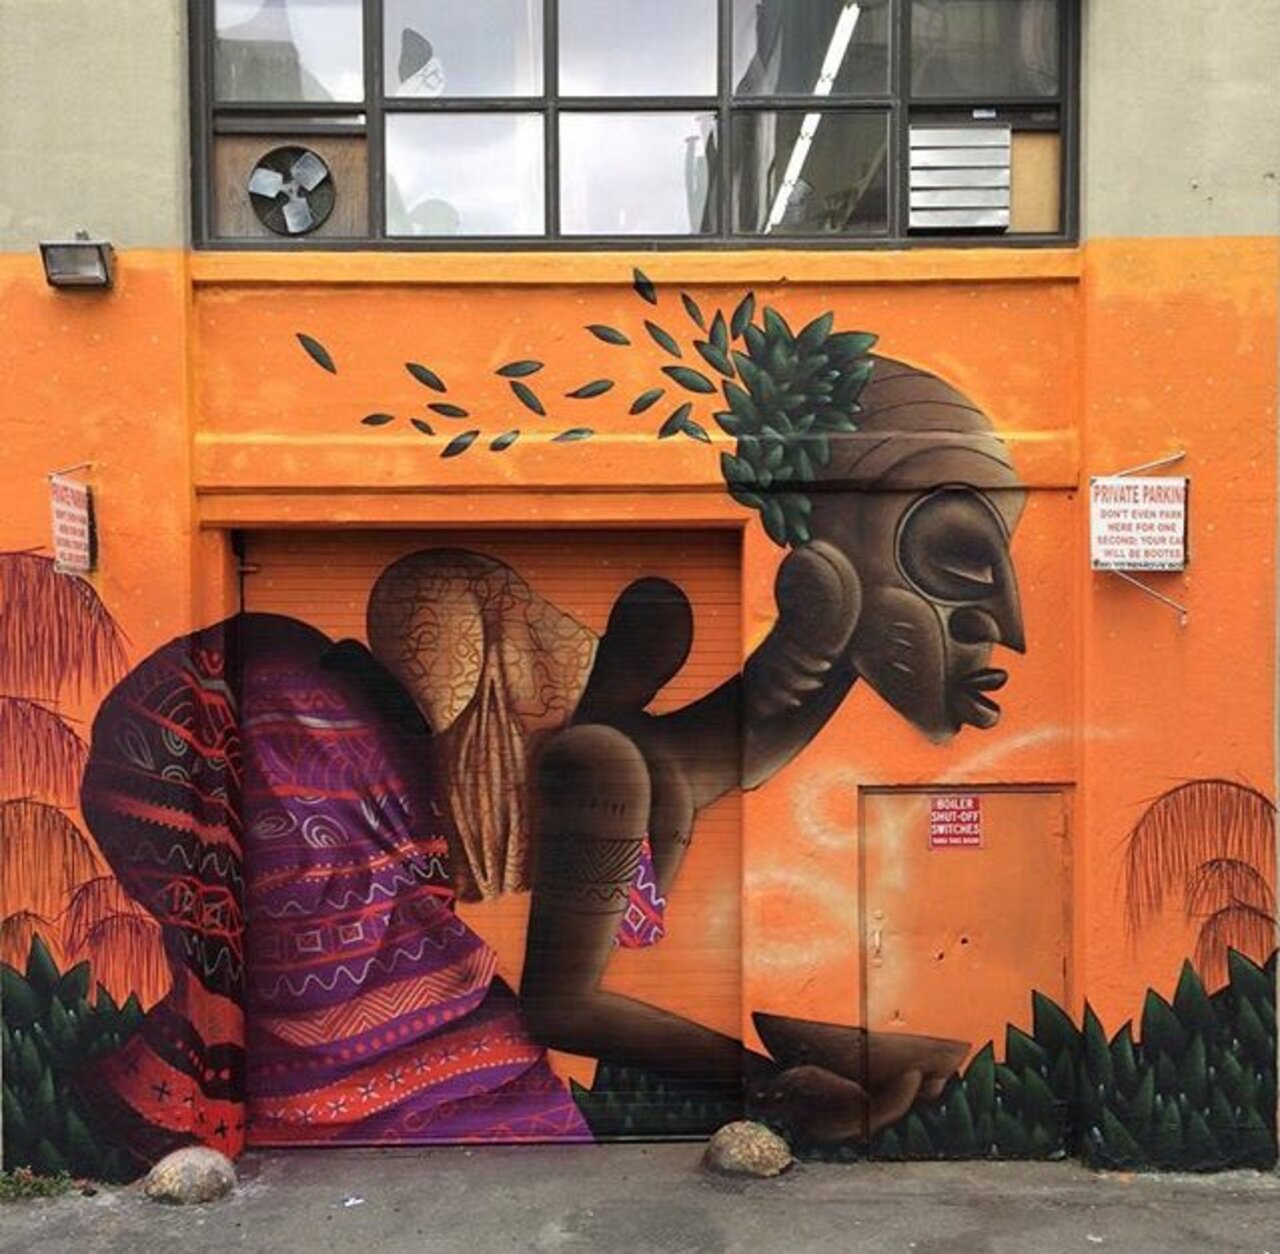 New Street Art by Alexandre Keto in NYC 

#art #graffiti #mural #streetart https://t.co/yrelHPTJpb